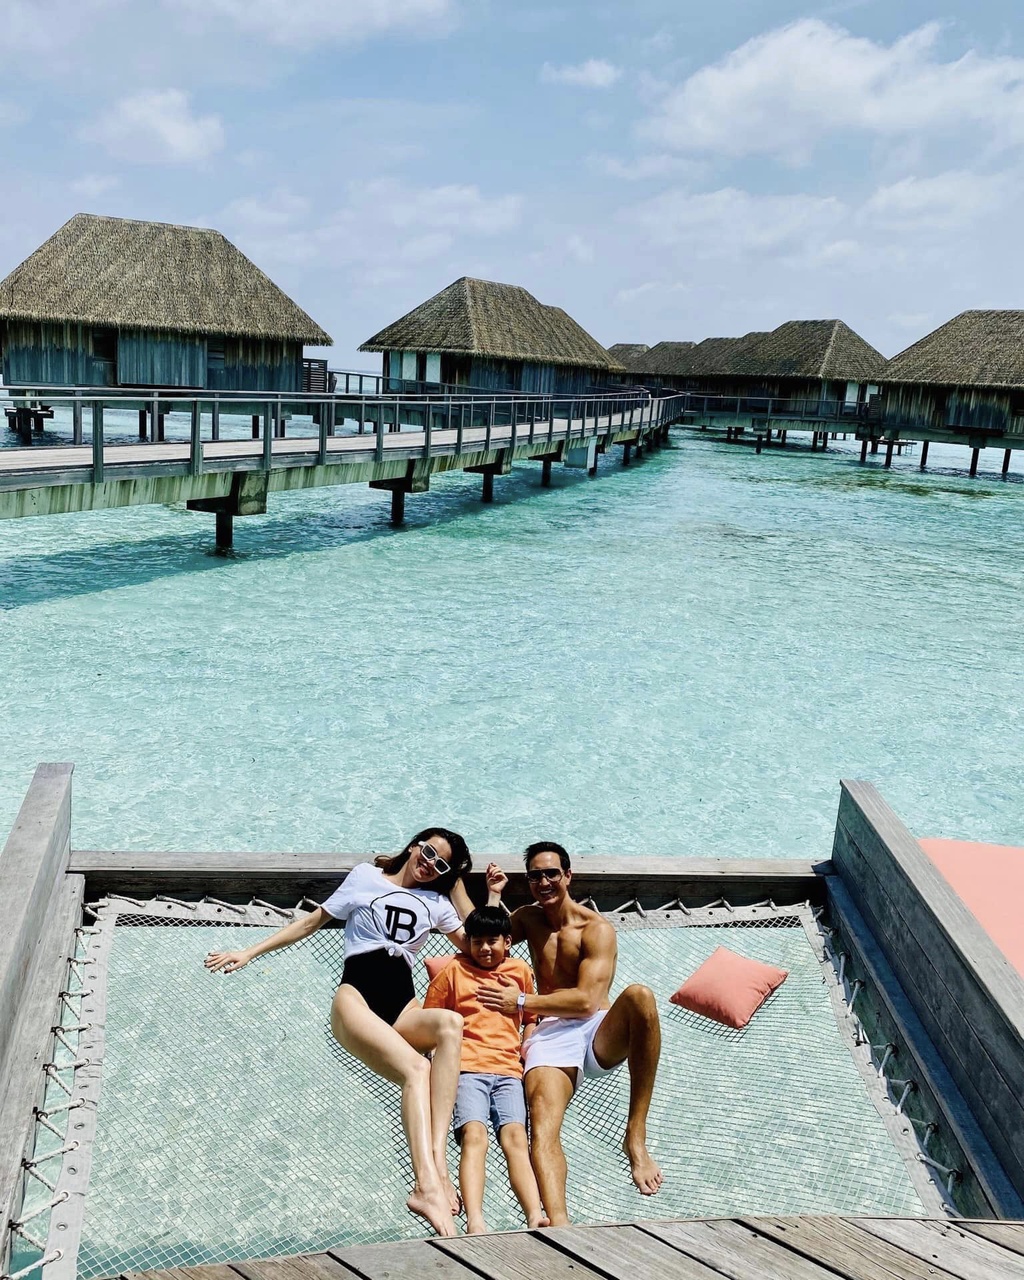 Nhung khu resort sang chanh bac nhat Maldives duoc sao Viet lua chon hinh anh 5 IMG_4530.JPG